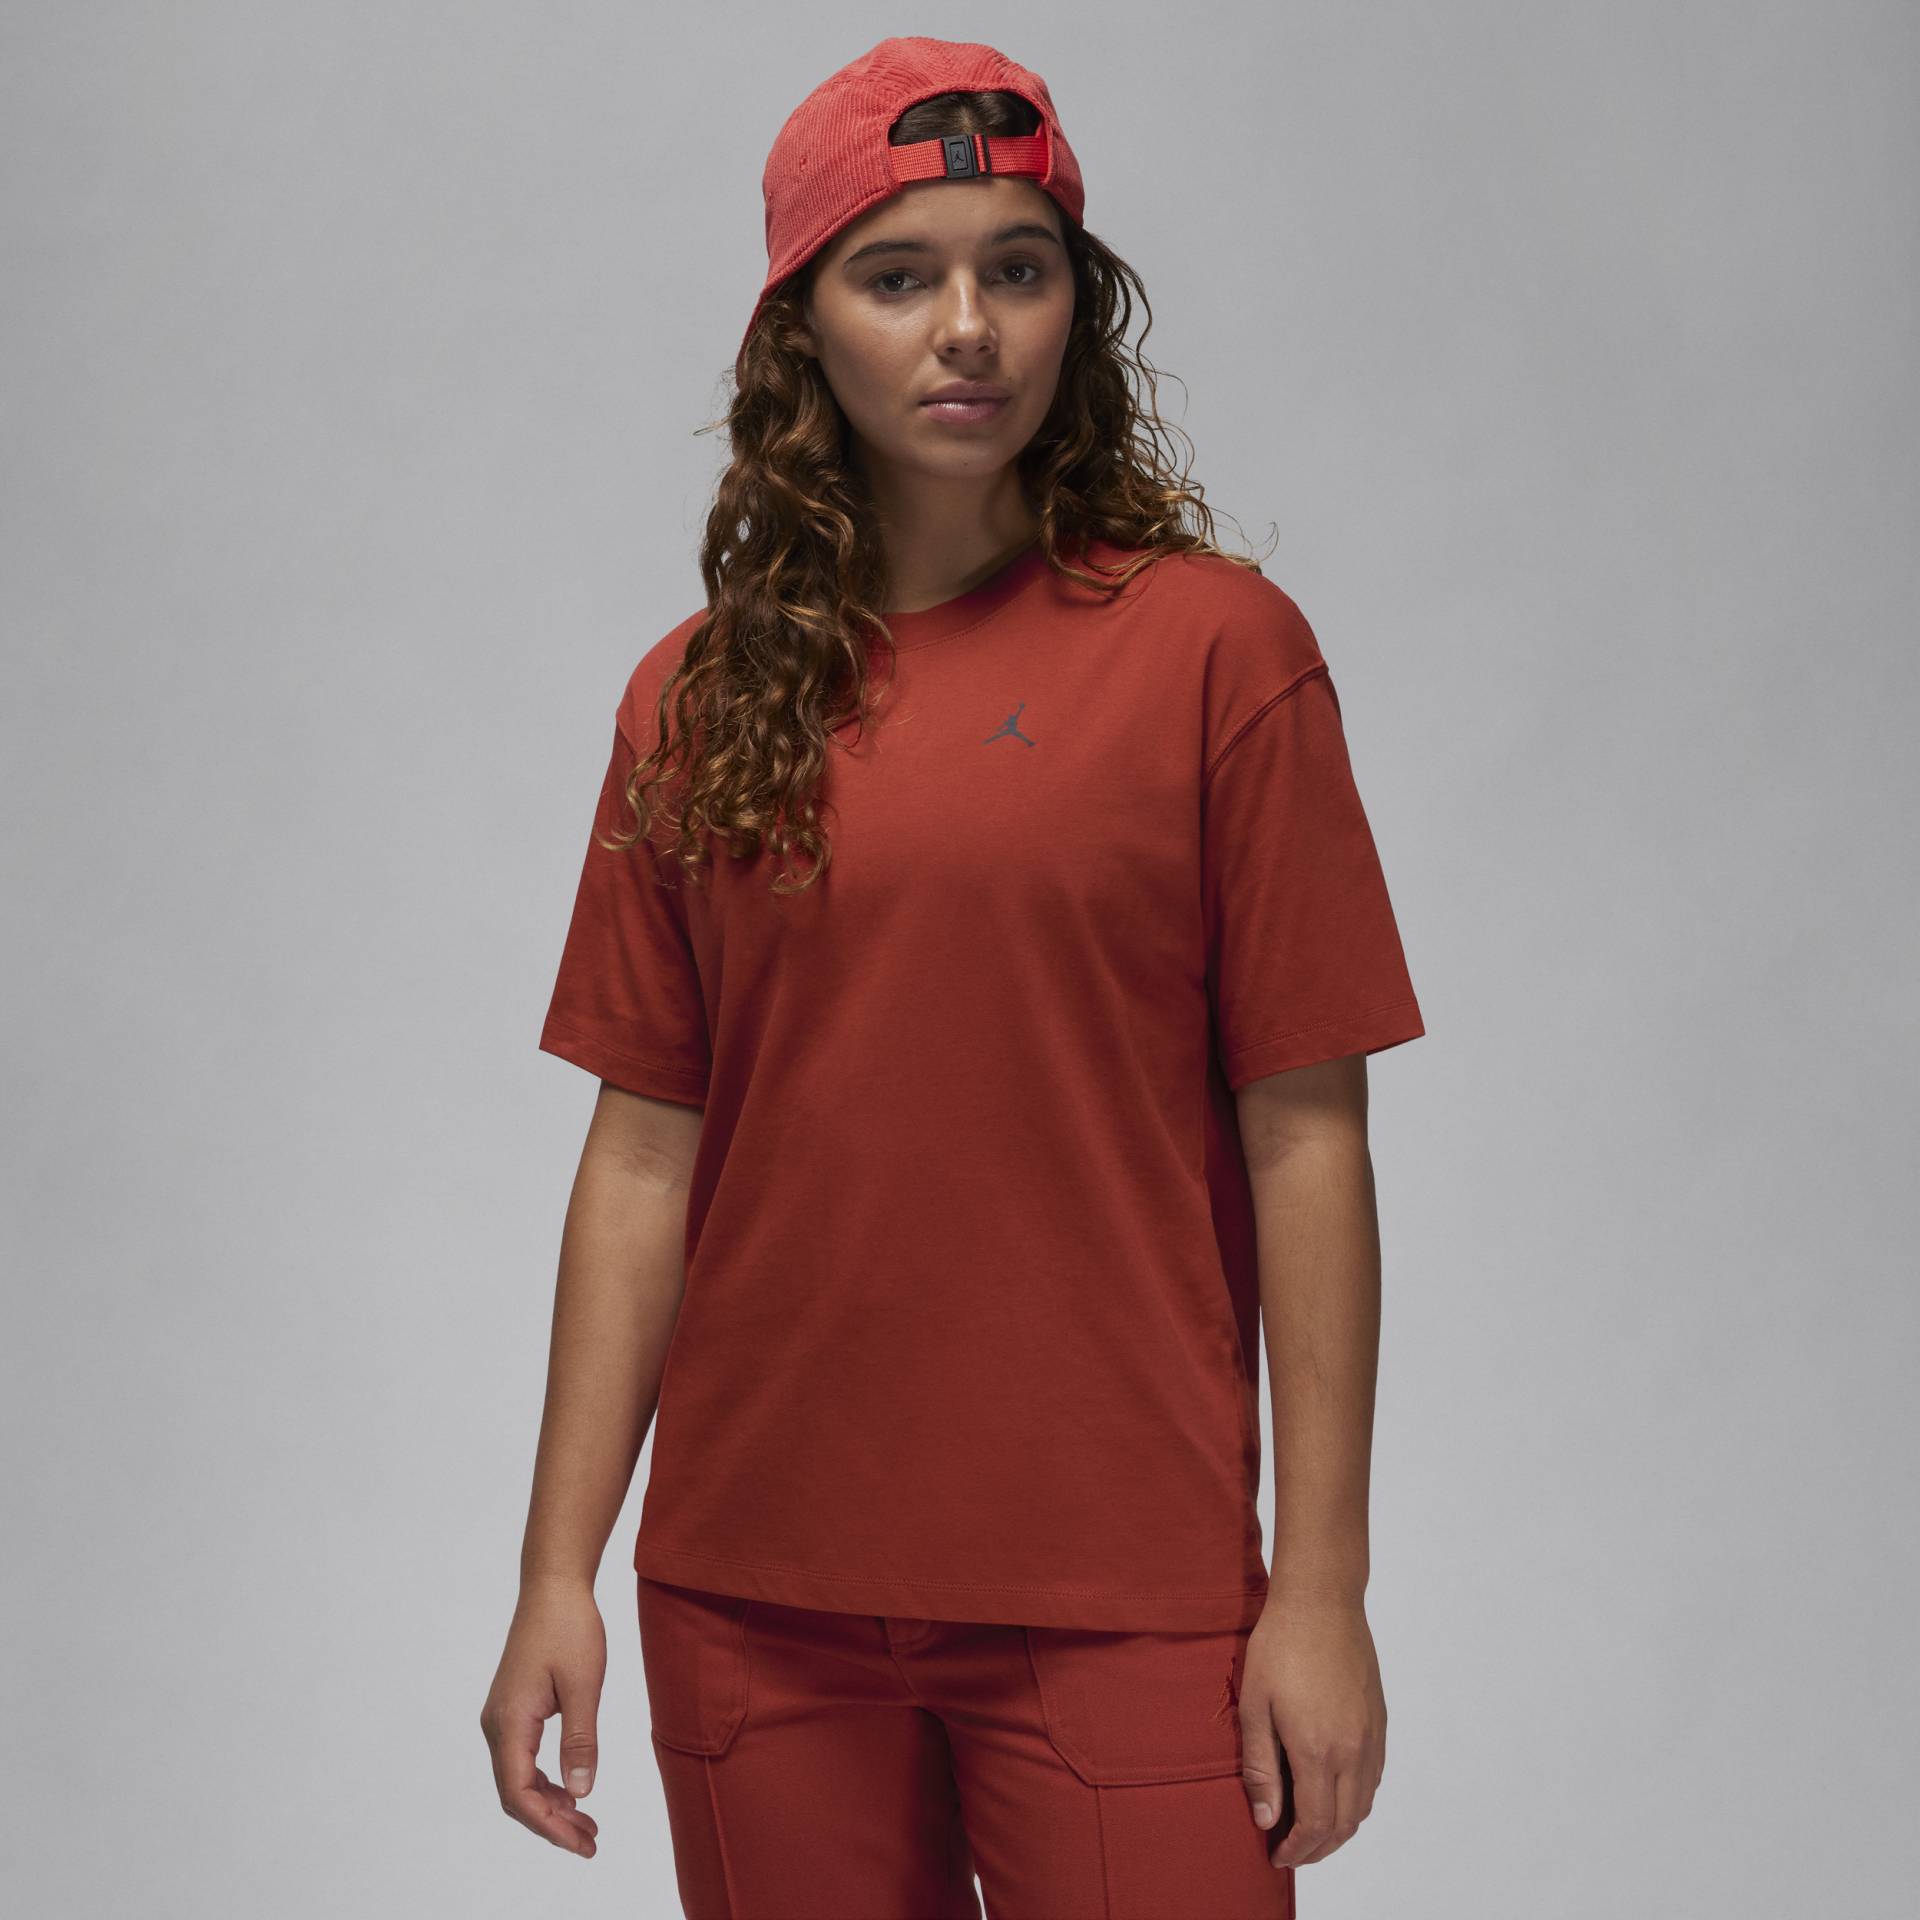 Jordan T-Shirt für Damen - Rot von Jordan